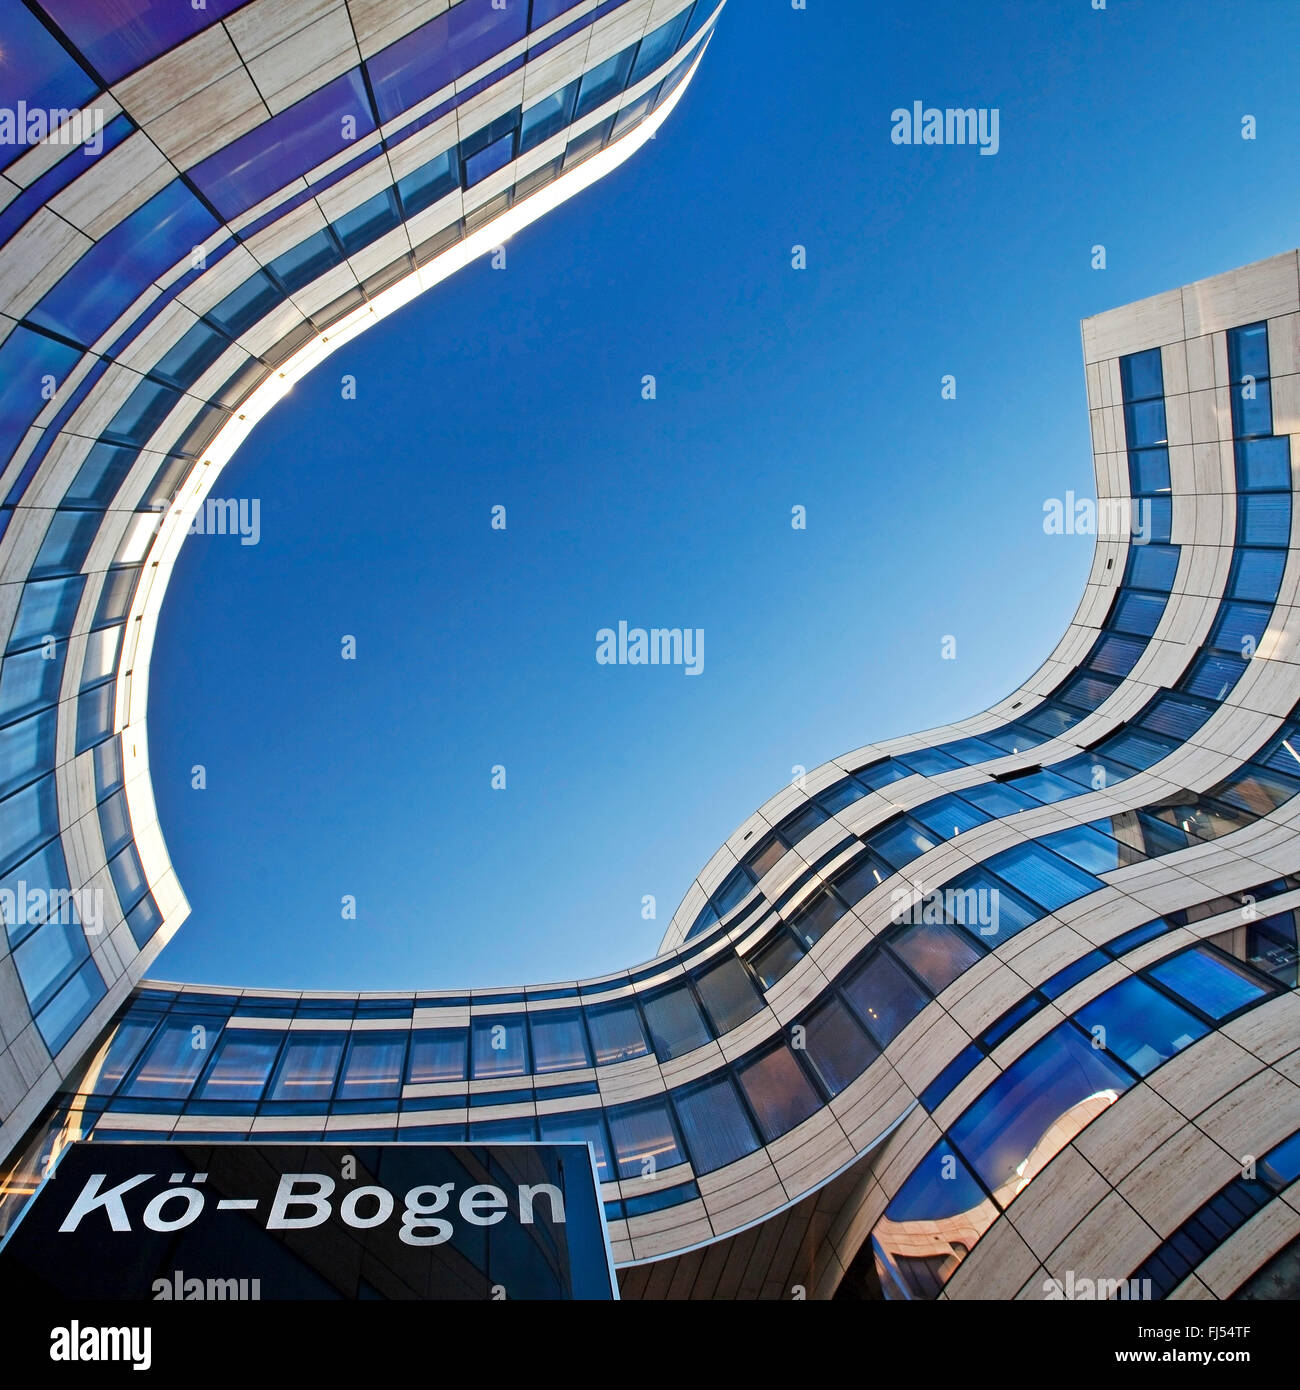 the Koe-Bogen, office and business buildings, Germany, North Rhine-Westphalia, Duesseldorf Stock Photo